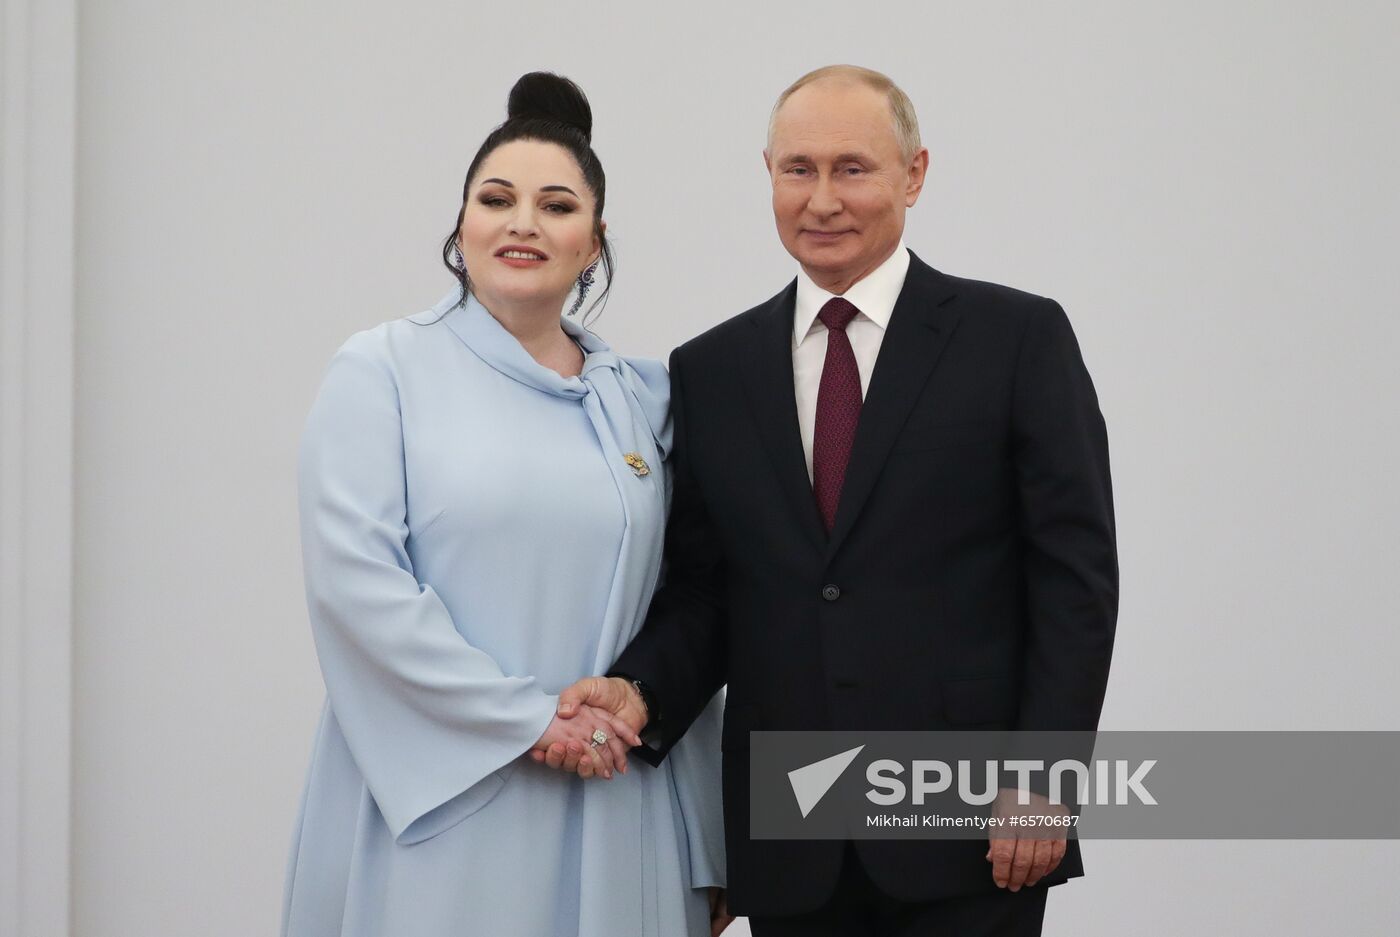 Russia Putin Awards